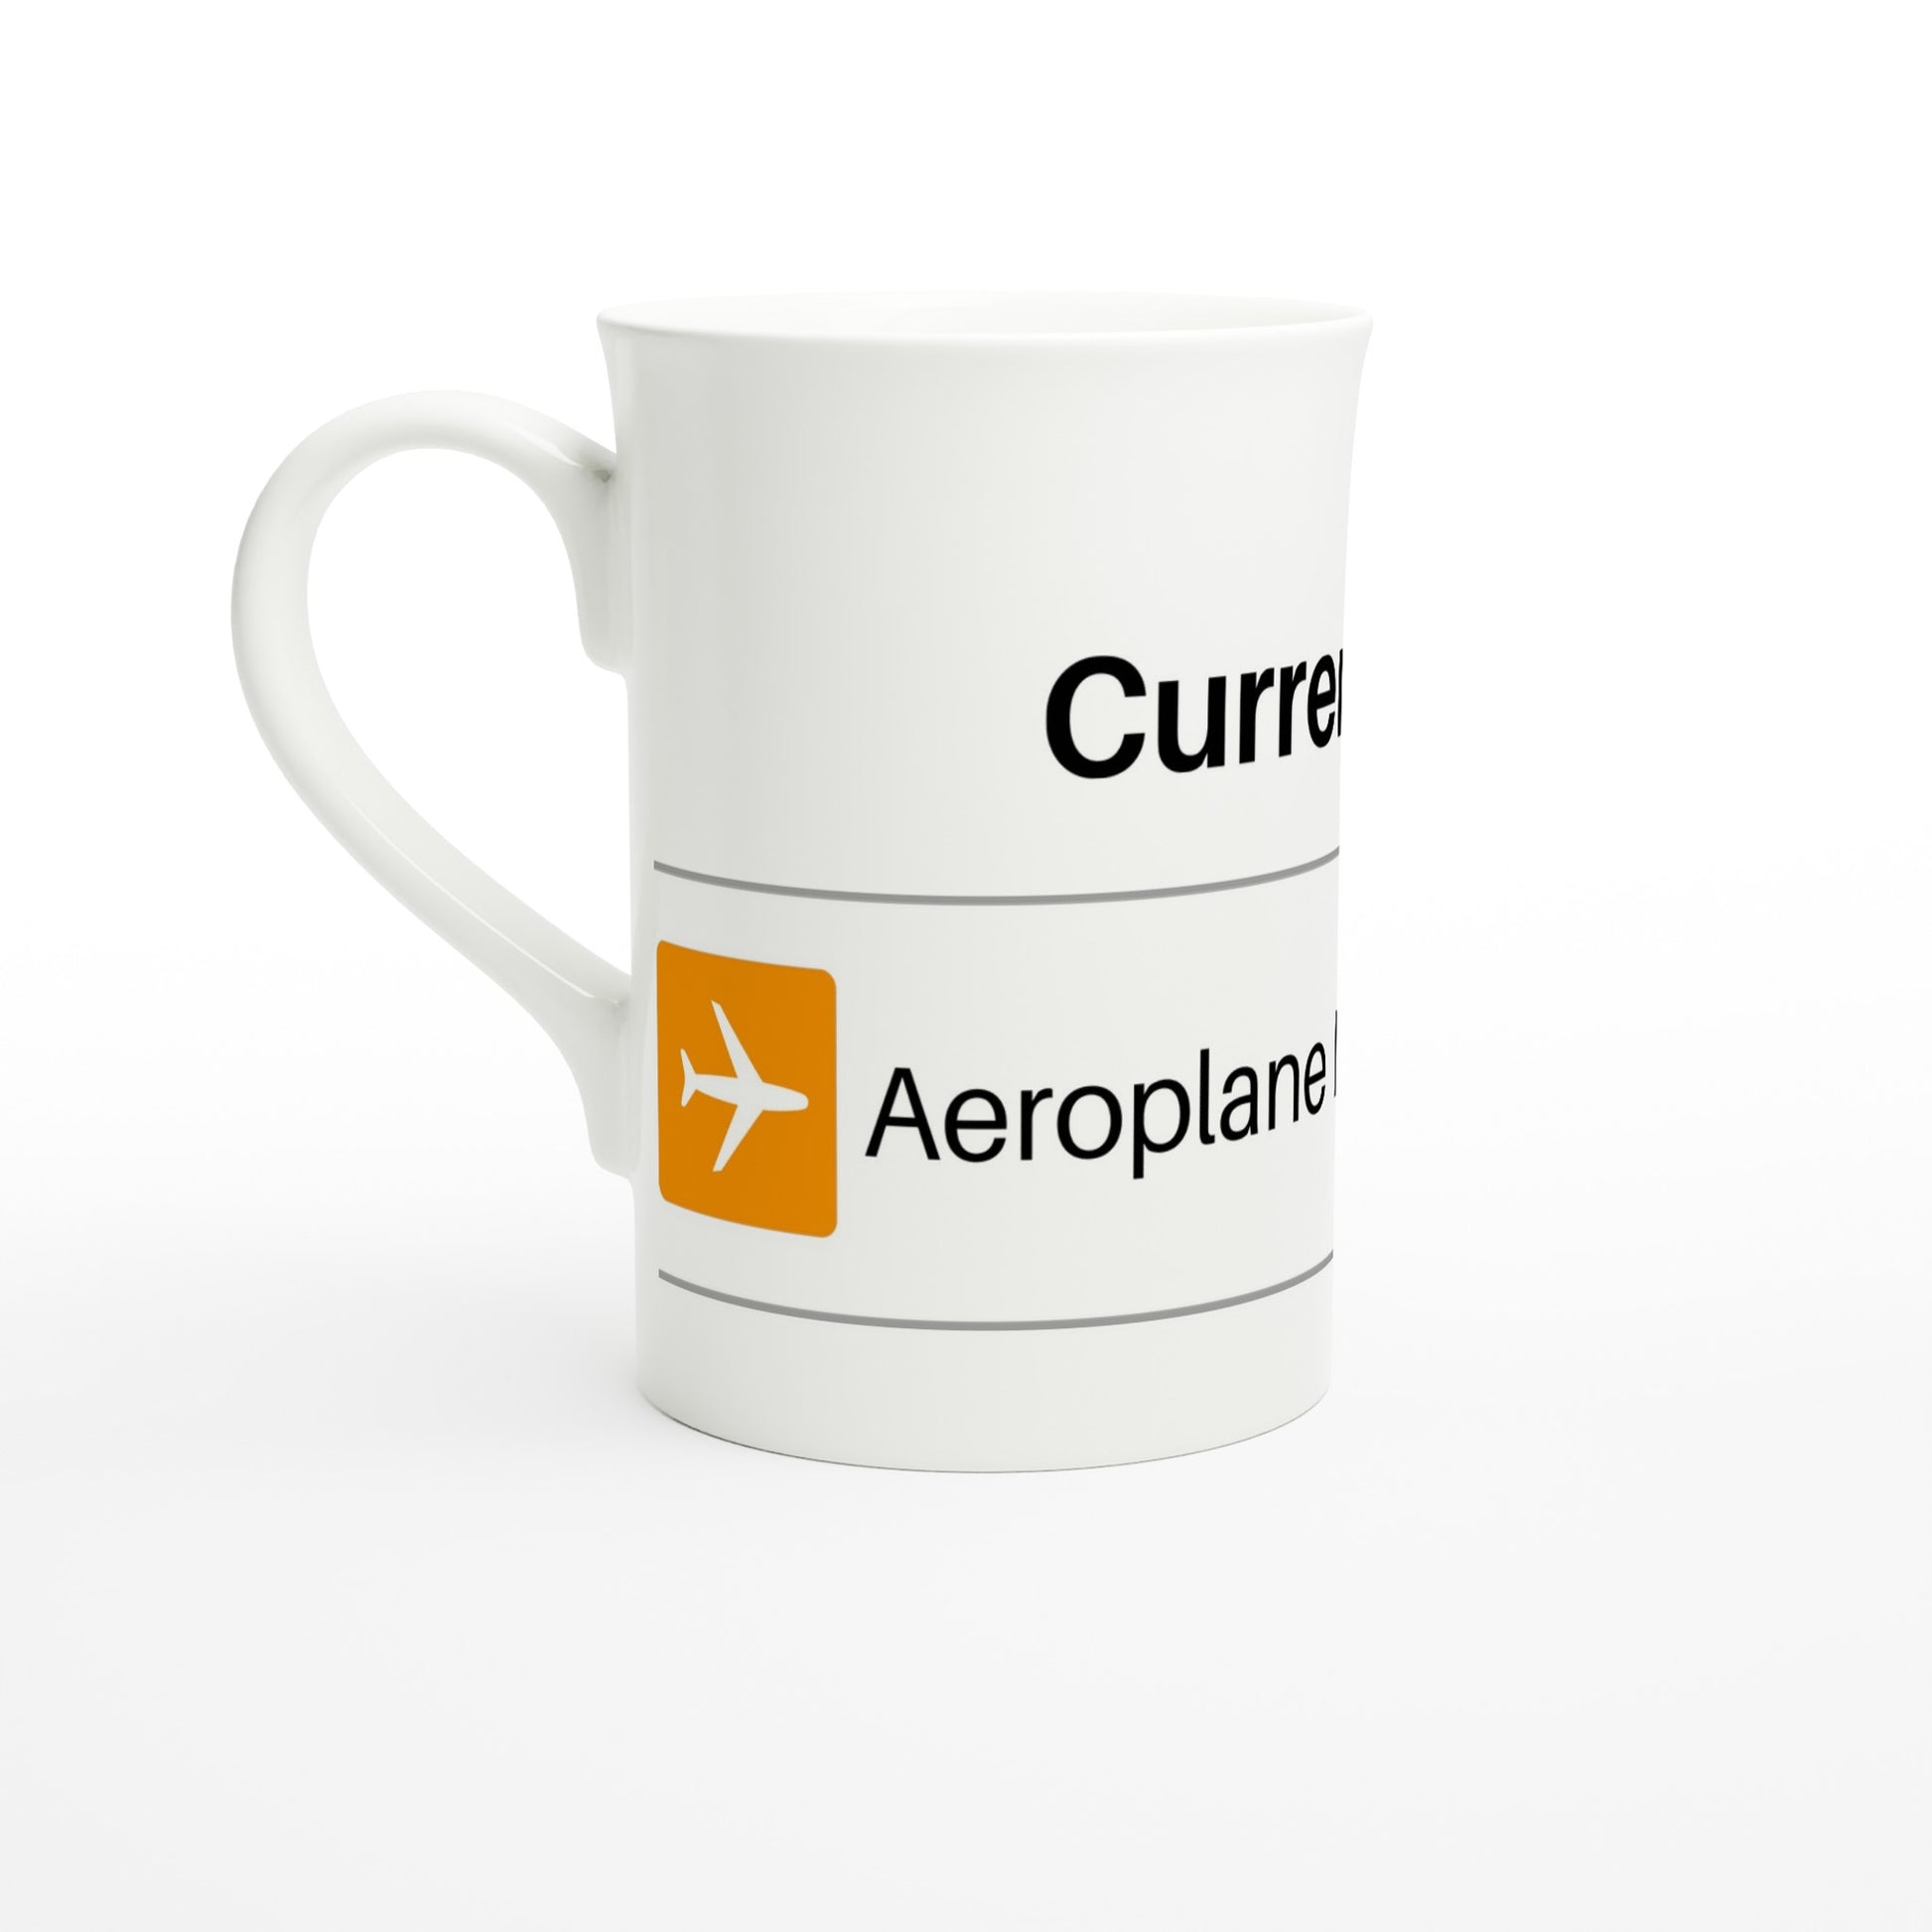 Currently On Aeroplane Mode - White 10oz Porcelain Slim Mug Default Title Porcelain Mug